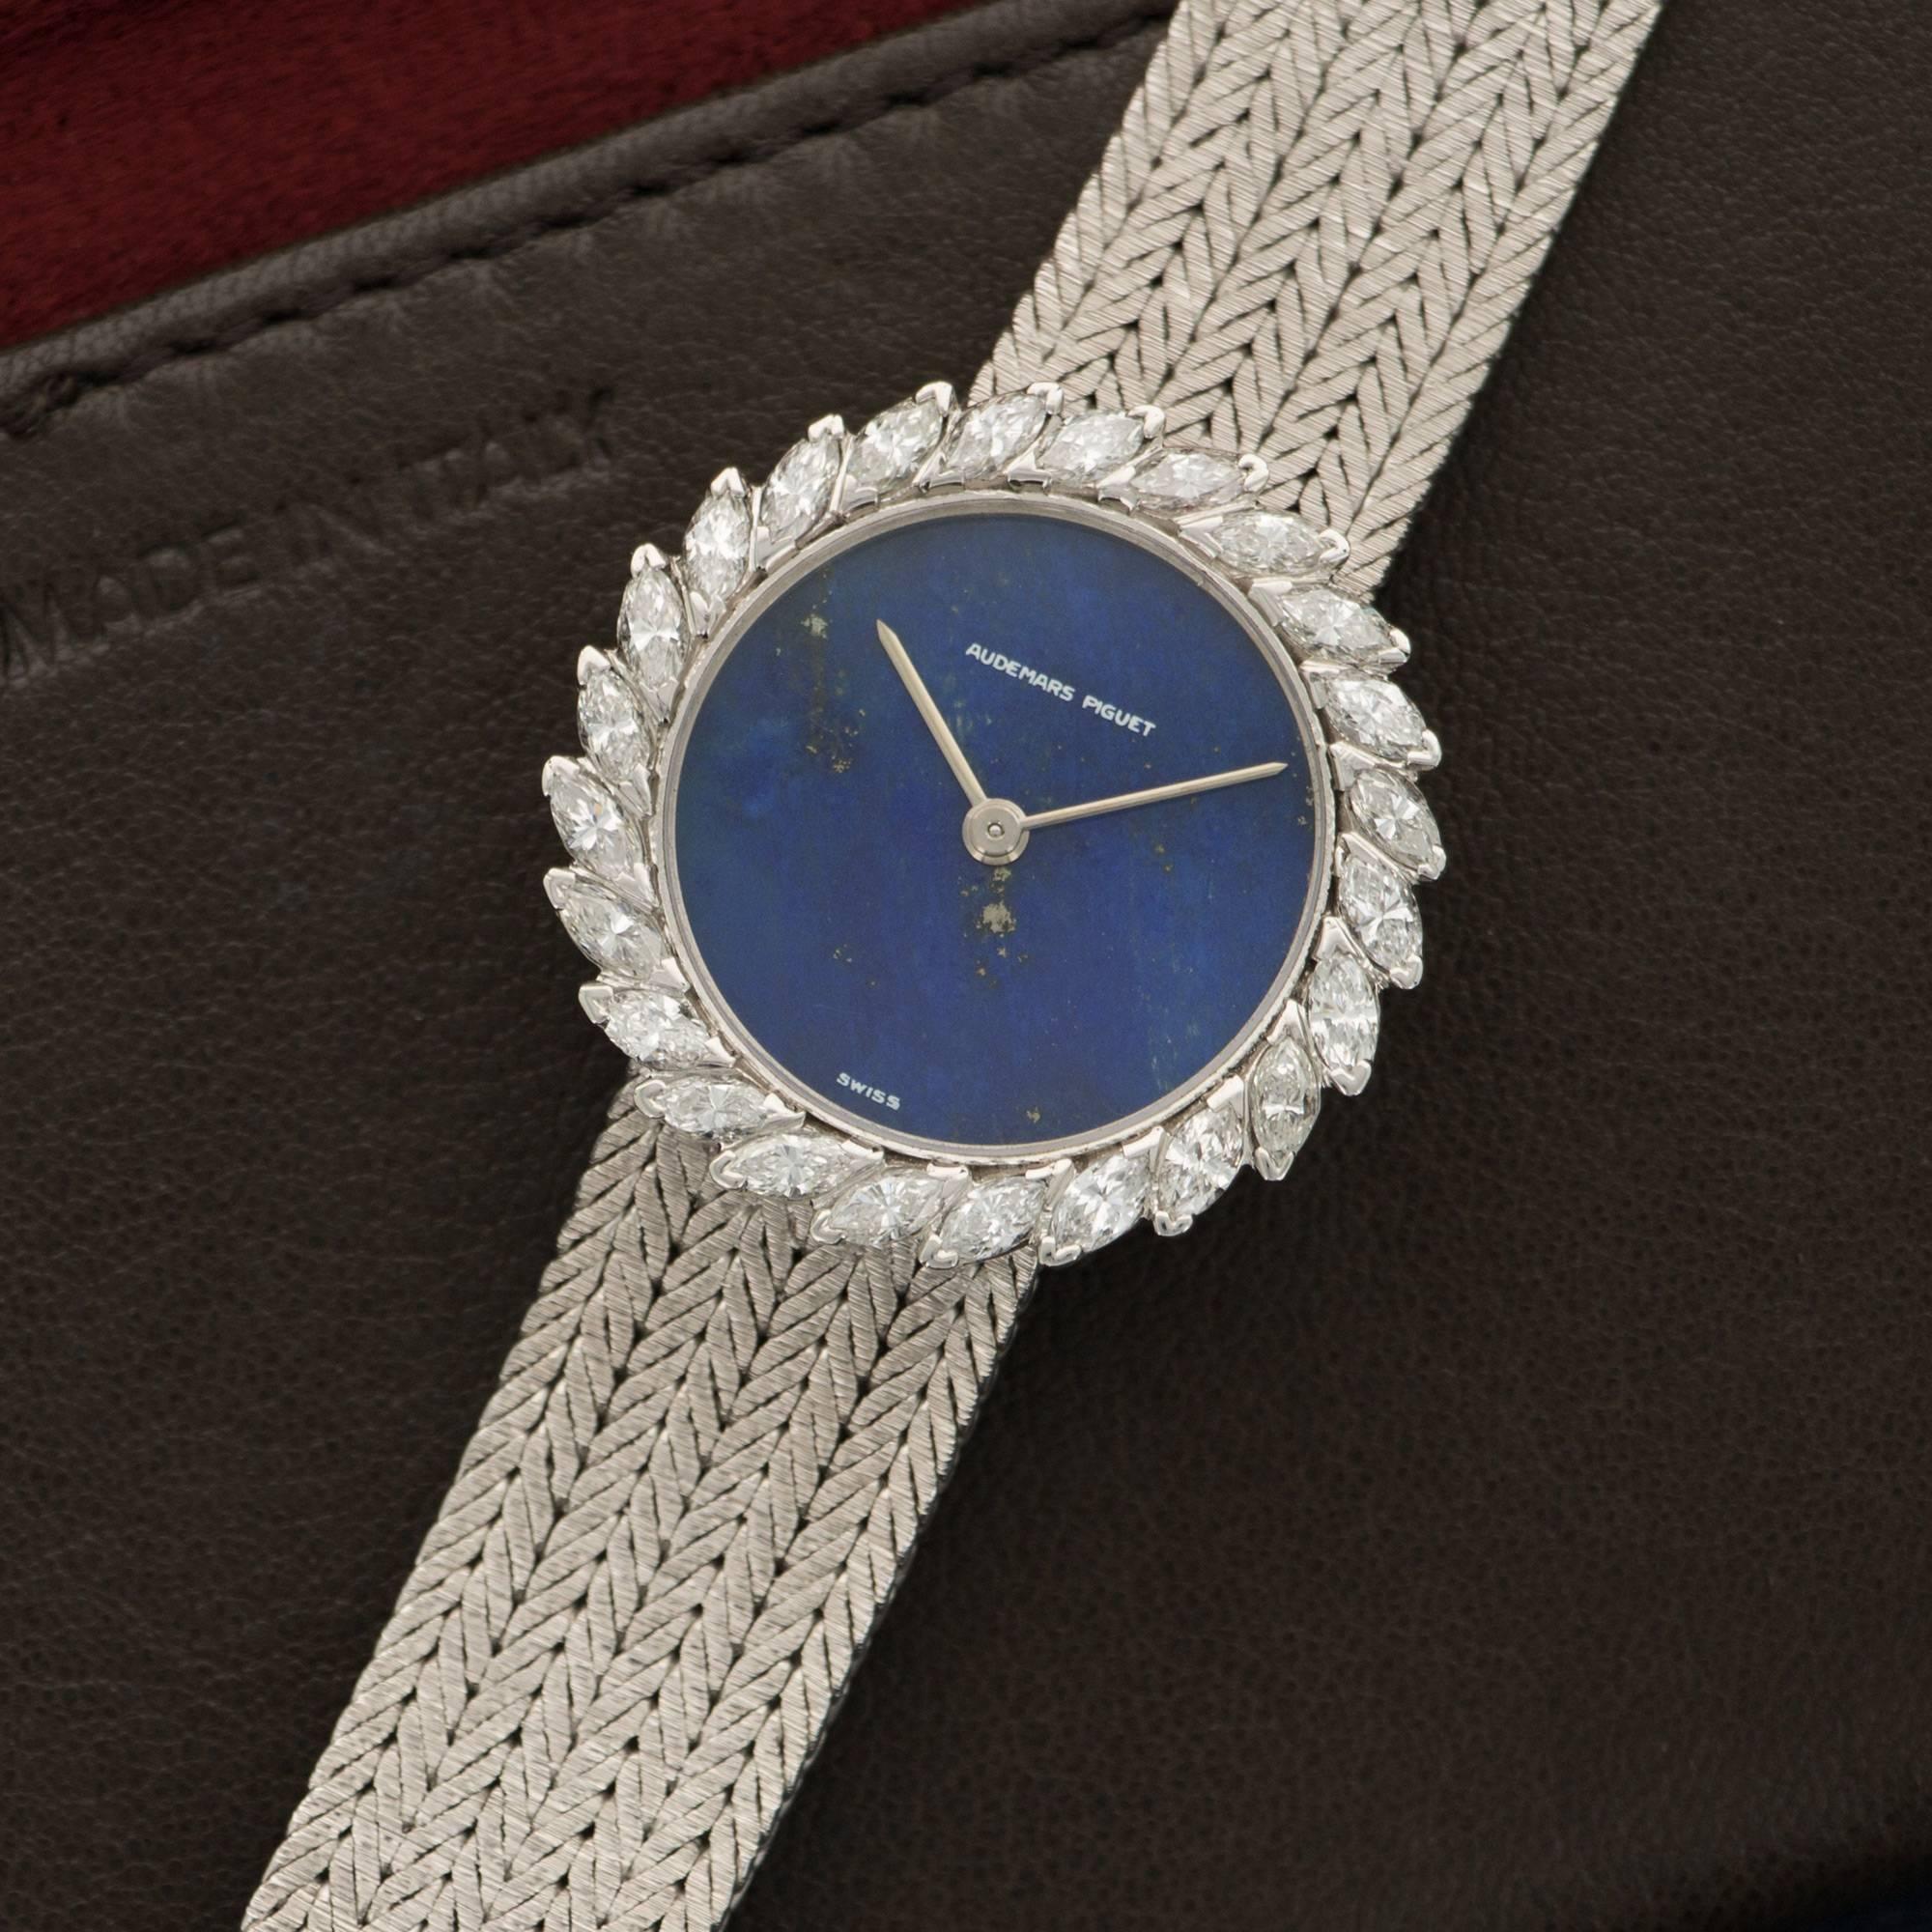 An 18k White Gold Audemars Piguet Watch with Lapis Lazuli Dial. Beautiful & Original Marquise-Shape Diamond Bezel. Case Diameter is 28mm. Bracelet is 170mm. 